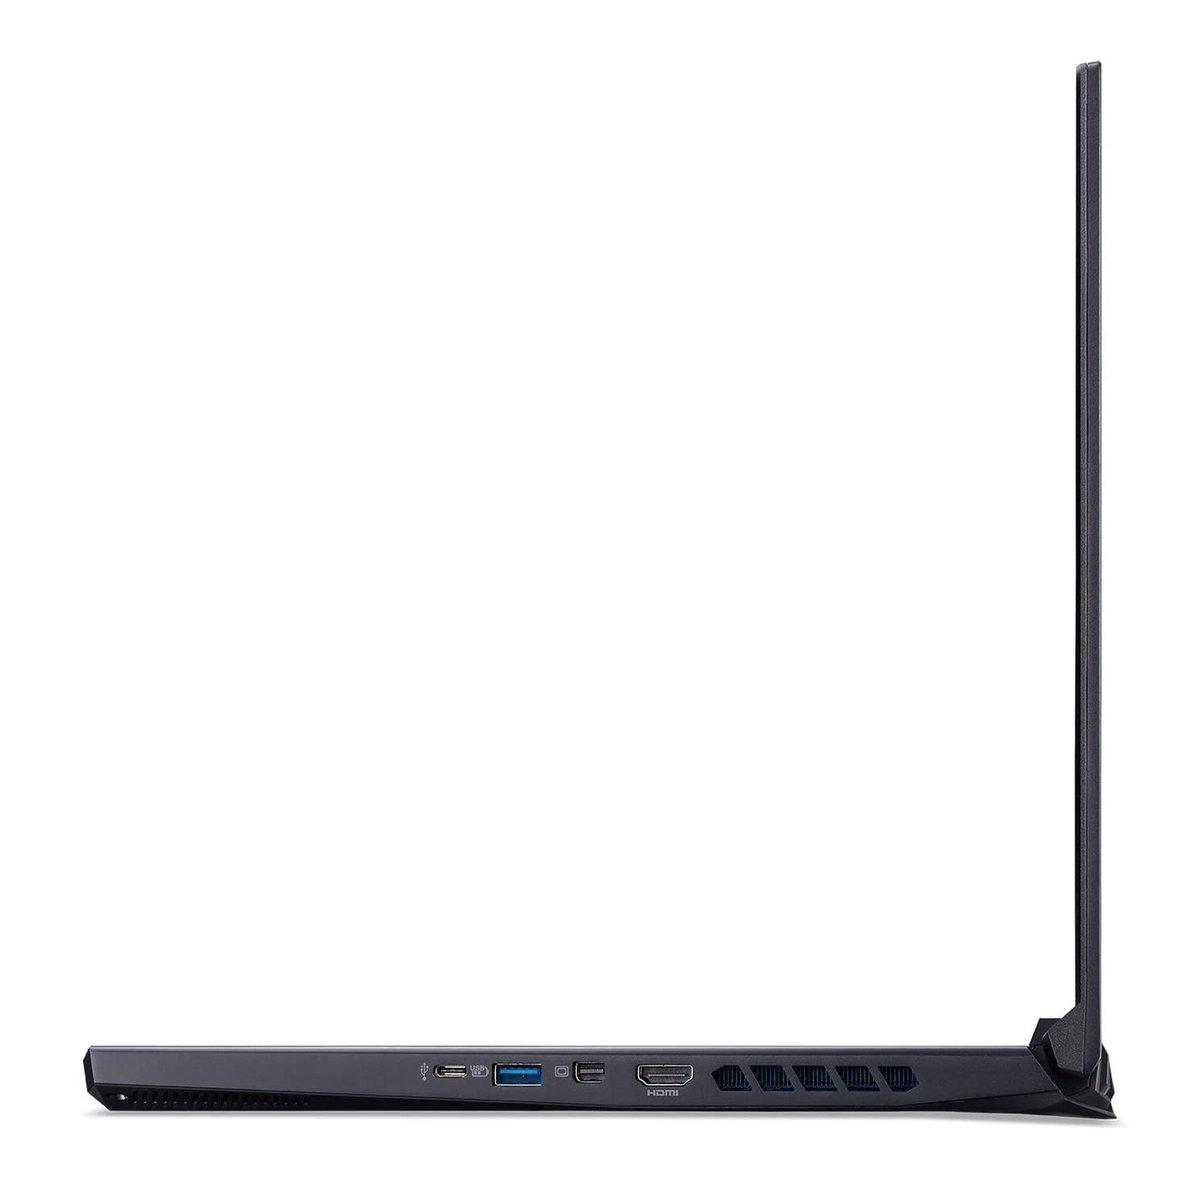 Acer Predator Helios 300-PH315-53-72M7 Gaming Laptop, Intel i7-10750H,VRAM 6 GB NVIDIA GeForce RTX 2060, 15.6" FHD IPS Display,24GB RAM, 1TB SSD,Black